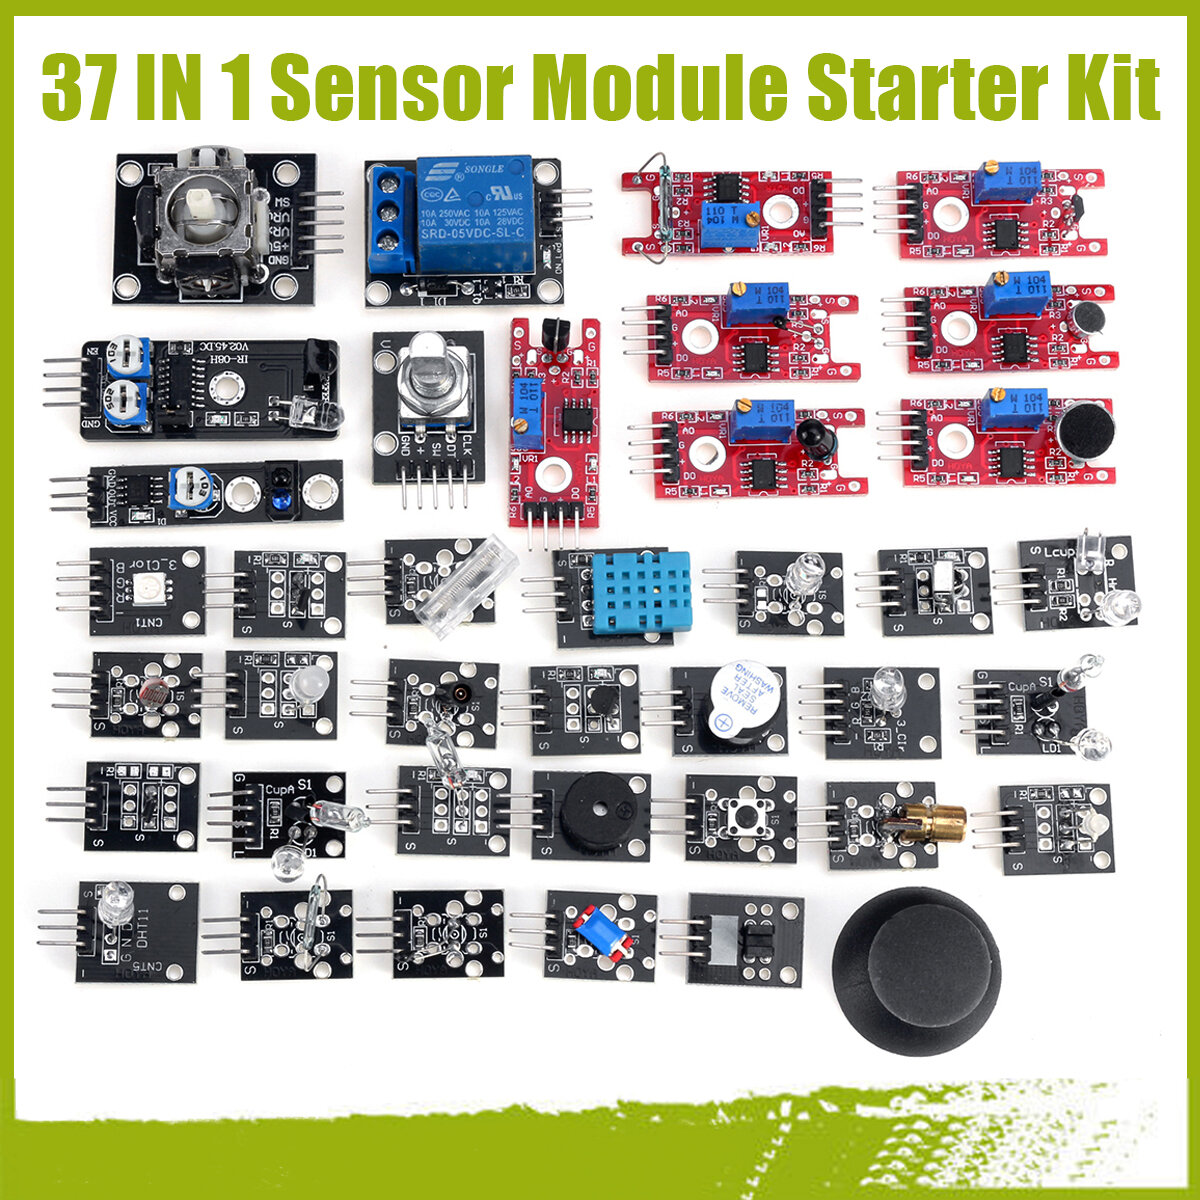 best price,in,sensor,module,starter,kit,discount